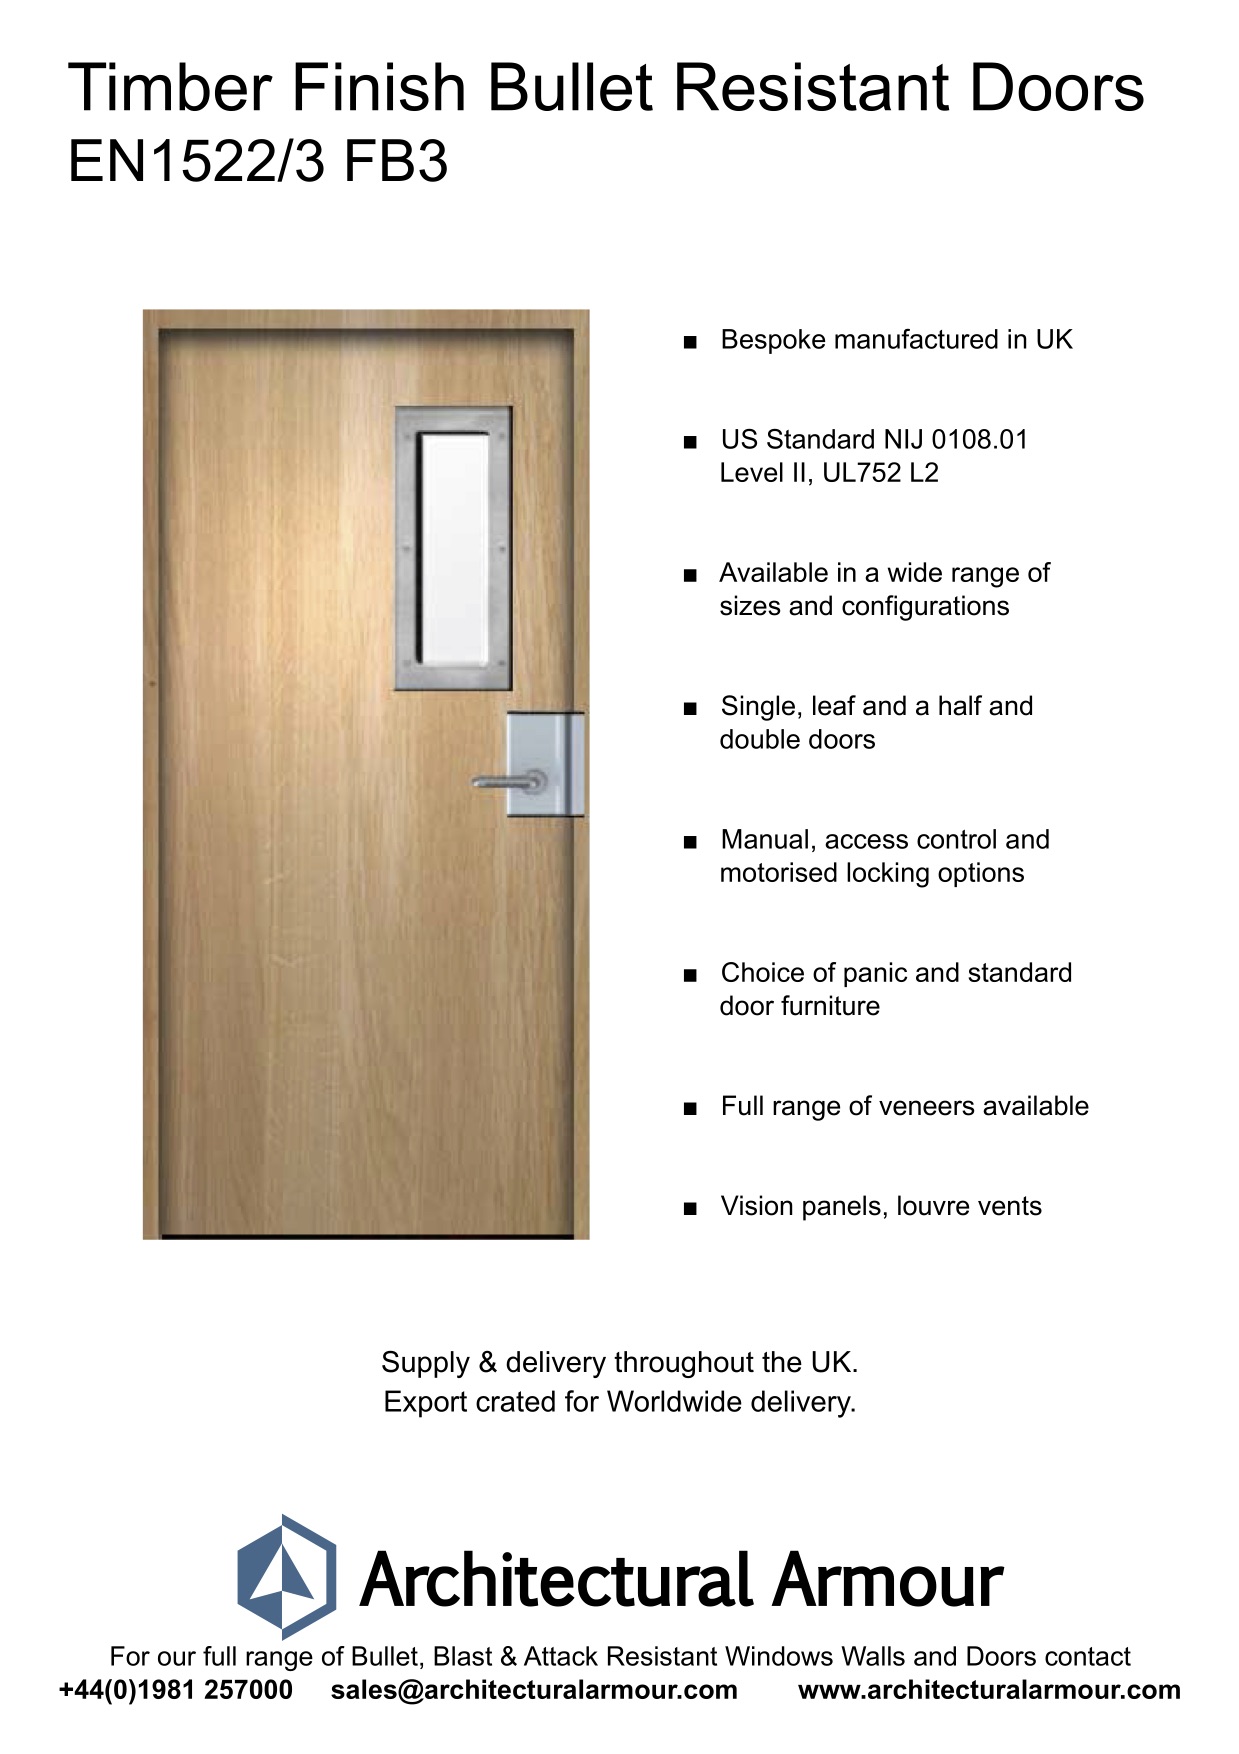 EN1522-3-FB3-Single-Slim-Vision-Panel-Bullet-Resistant-Timber-Finish-Door